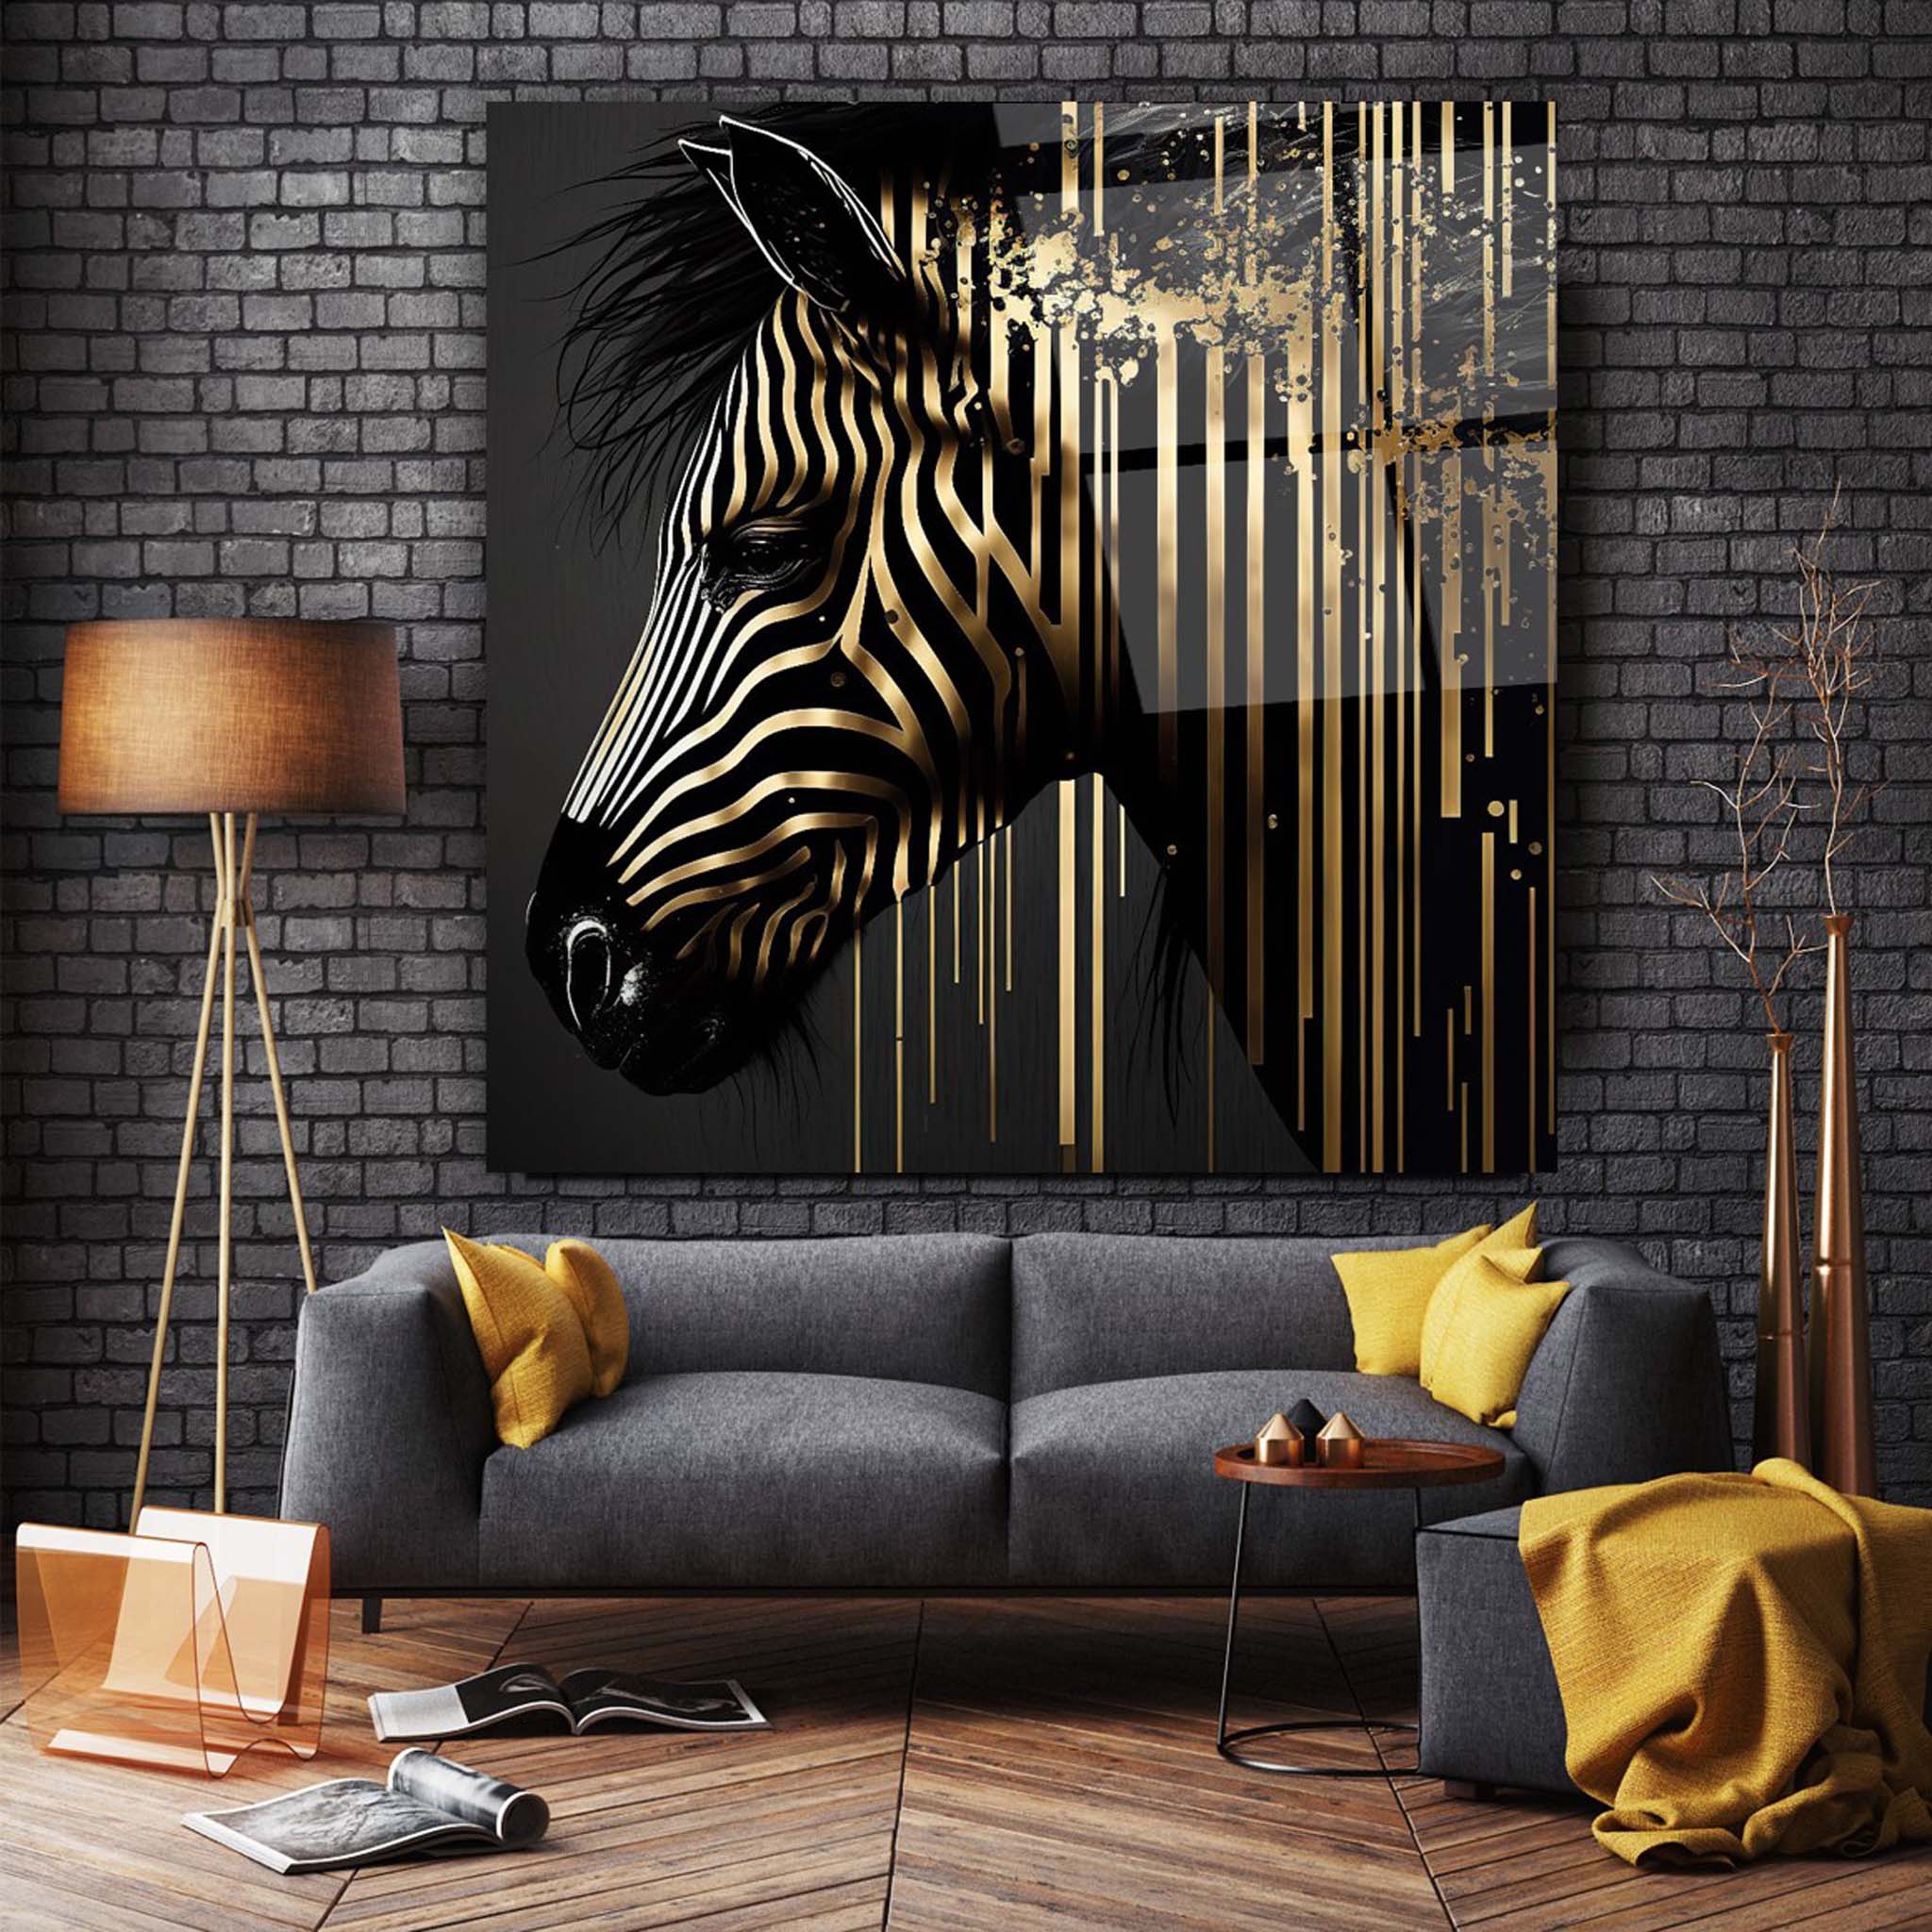 Zebra Glass Wall Art 2